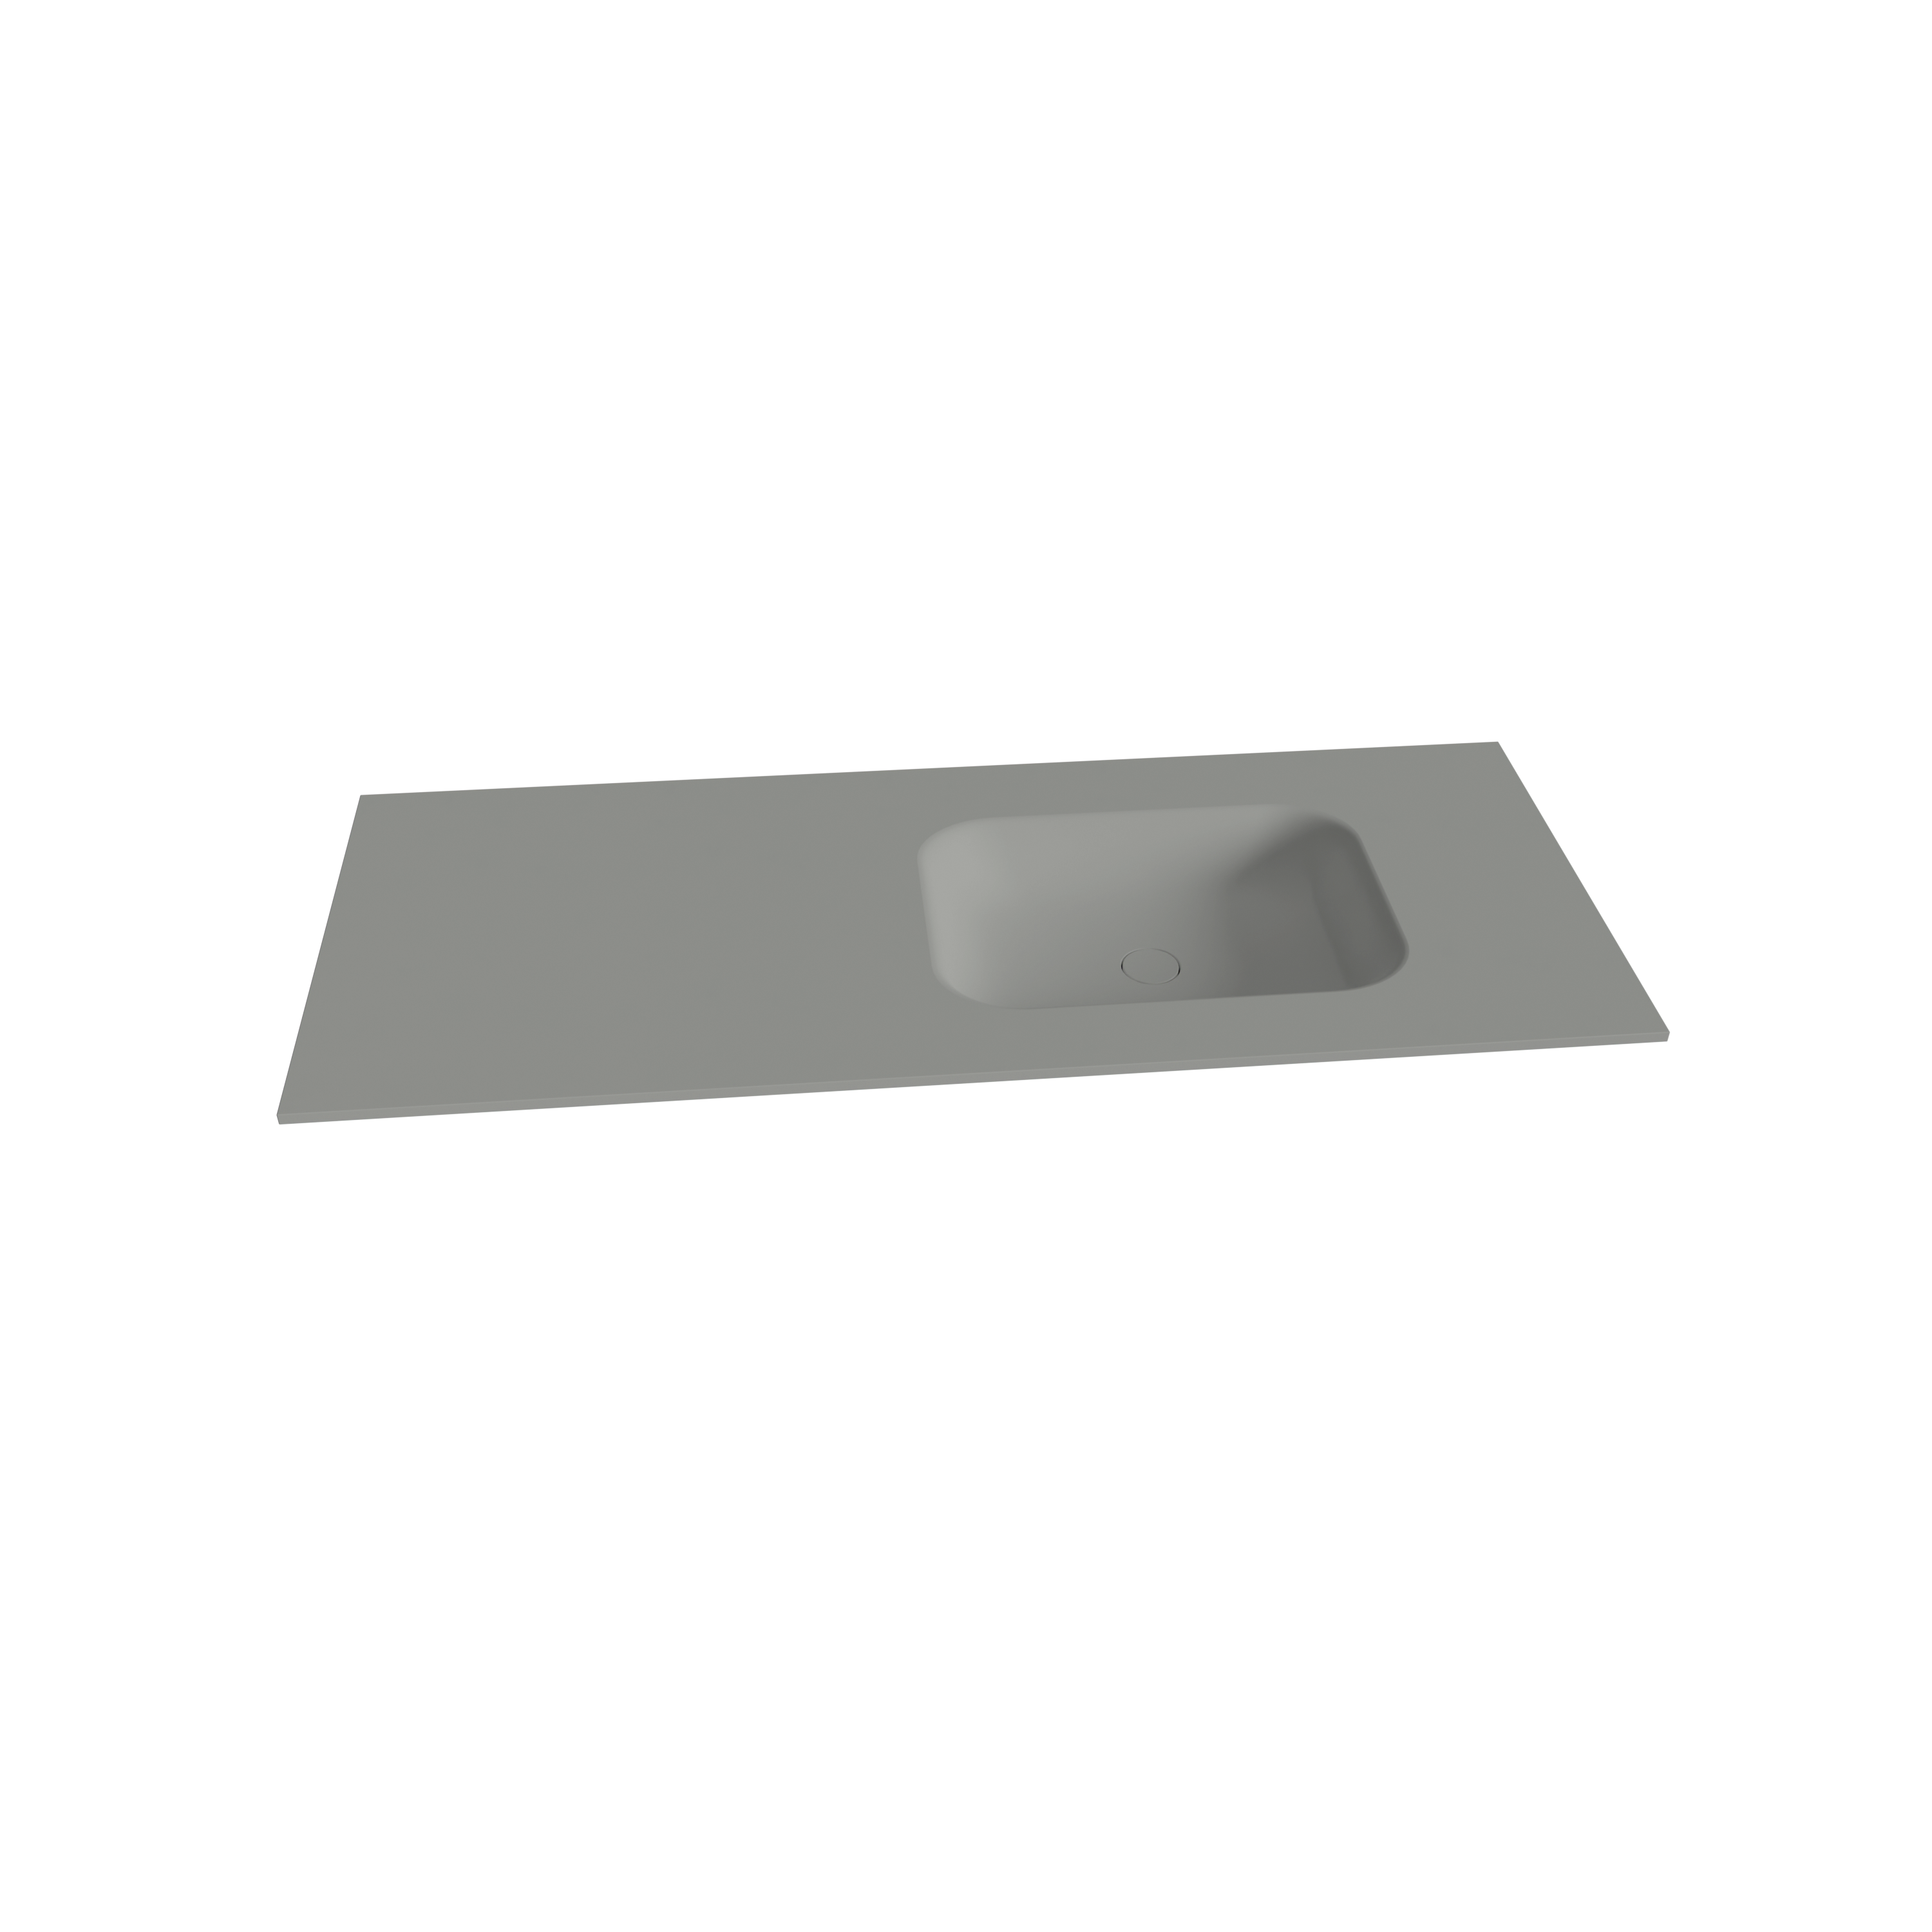 Balmani Balmani Tablo Arcato asymmetrisch rechtse wastafel met afvoerplug mat steengrijze Solid Surface 135 x 55,5 cm